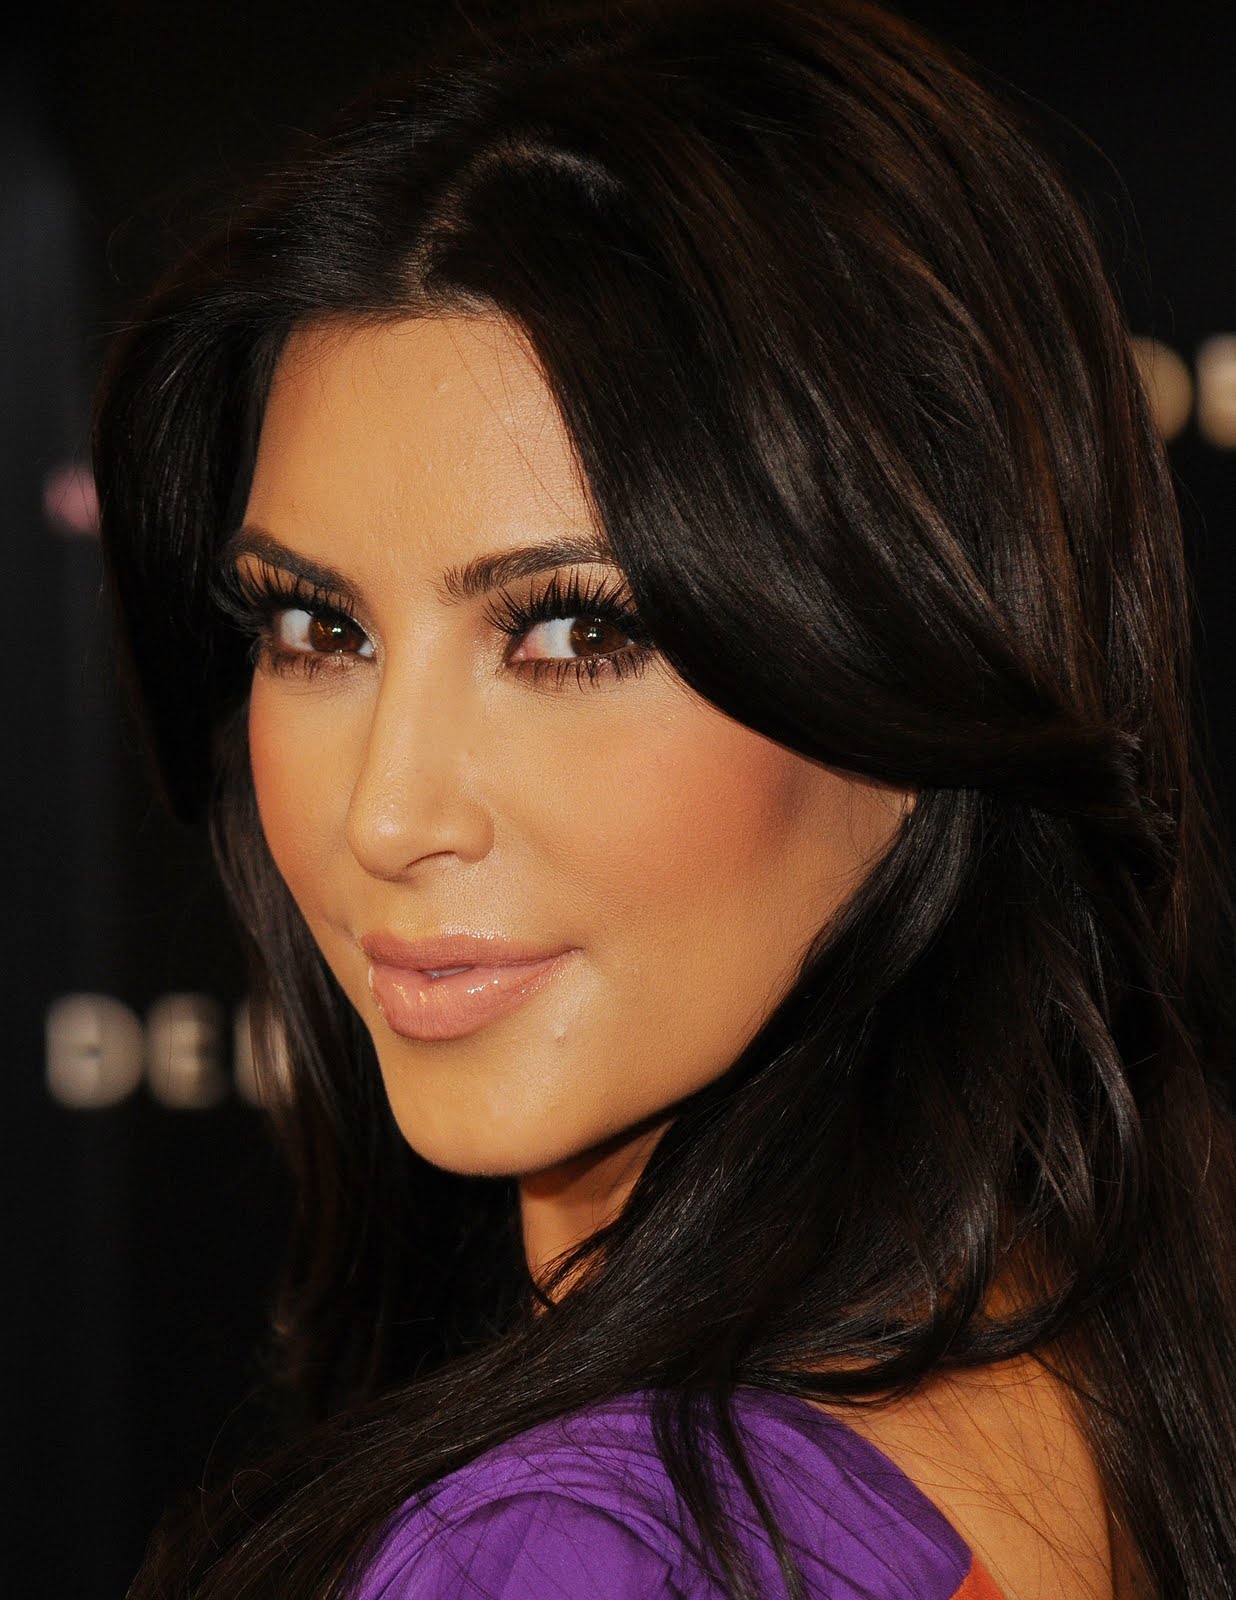 Kim kardashian hot photo galleries |Daily Pictures